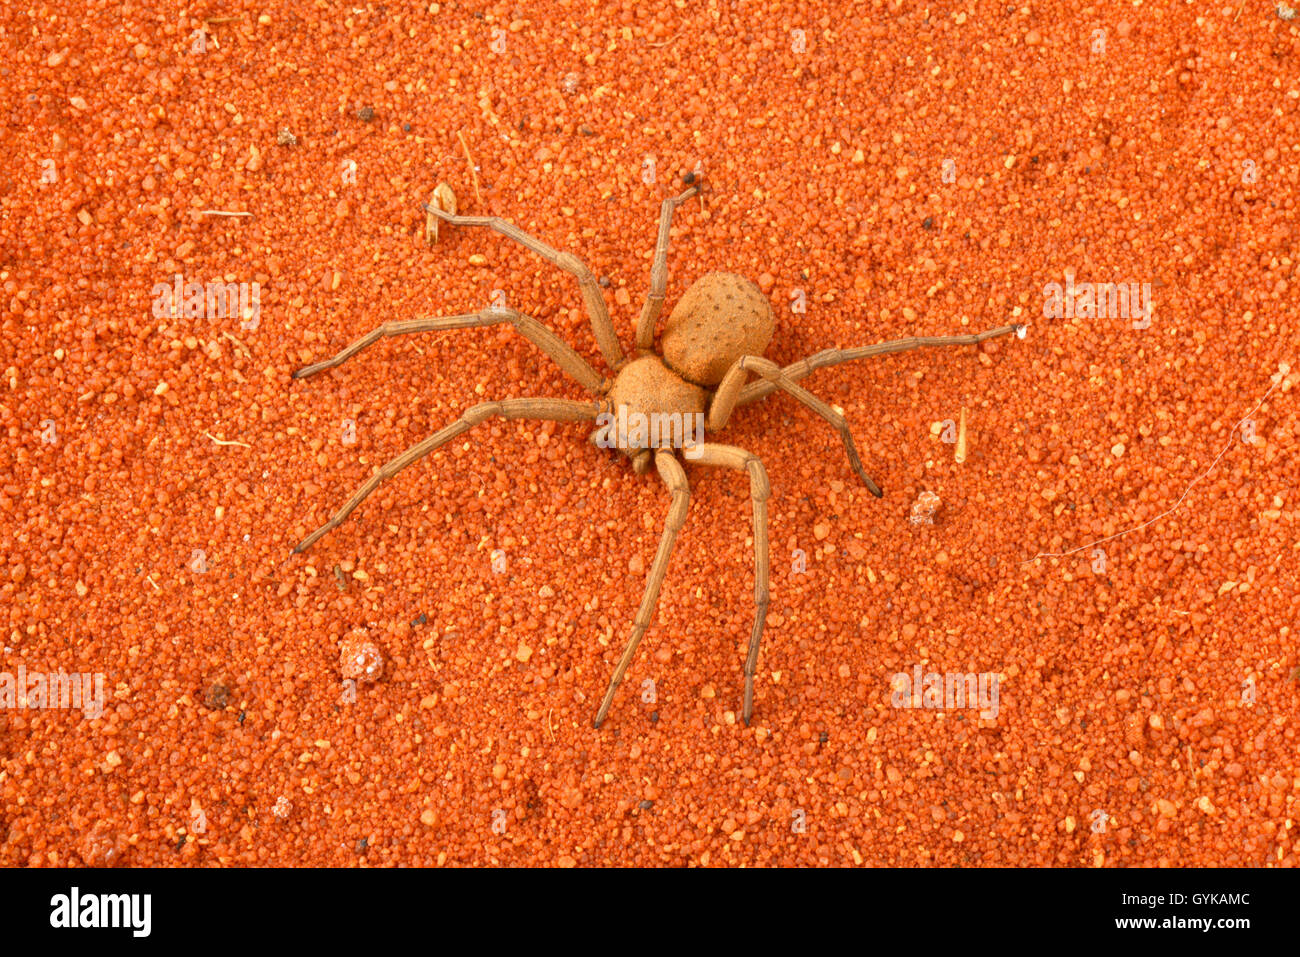 woodlouse hunter, sowbug-eating spider, cell spider (Sicarius terrosus), on red sand Stock Photo